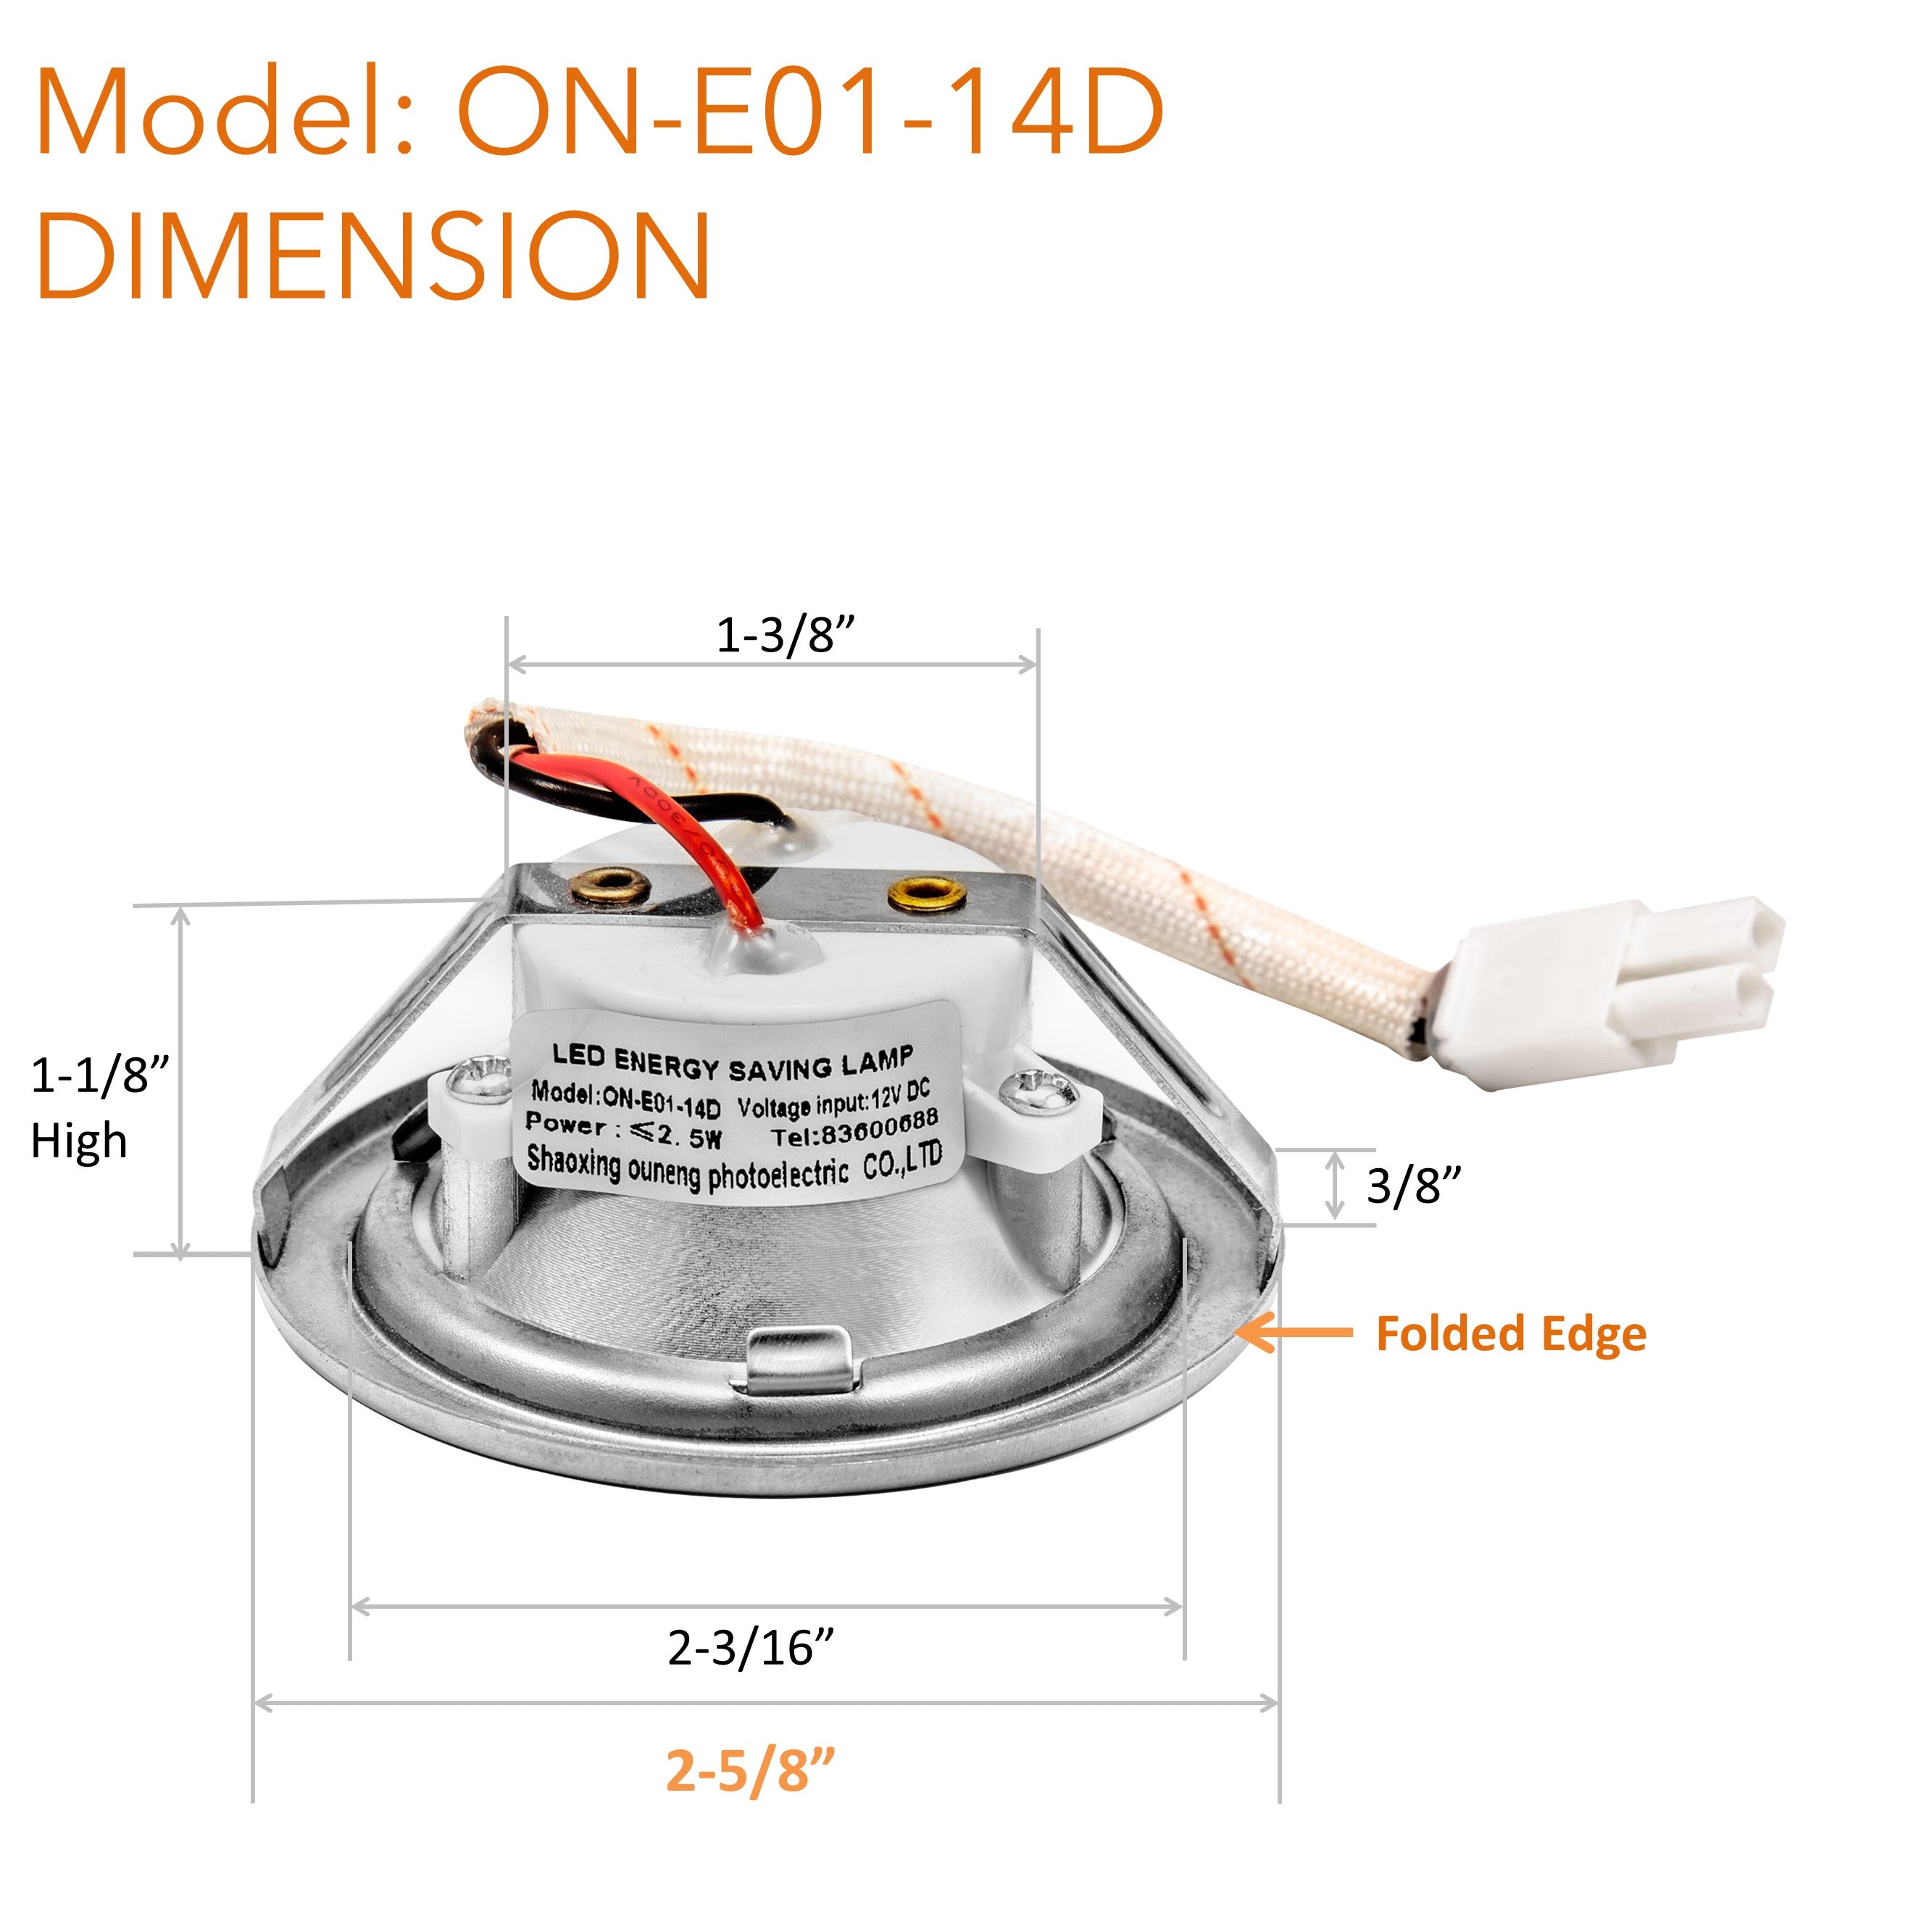 [2-5/8"Folded Edge] ON-E01-14D, 2 Pcs of 2-5/8” WARM 12VDC LED Lights for Range Hoods with Recessed Light Holes